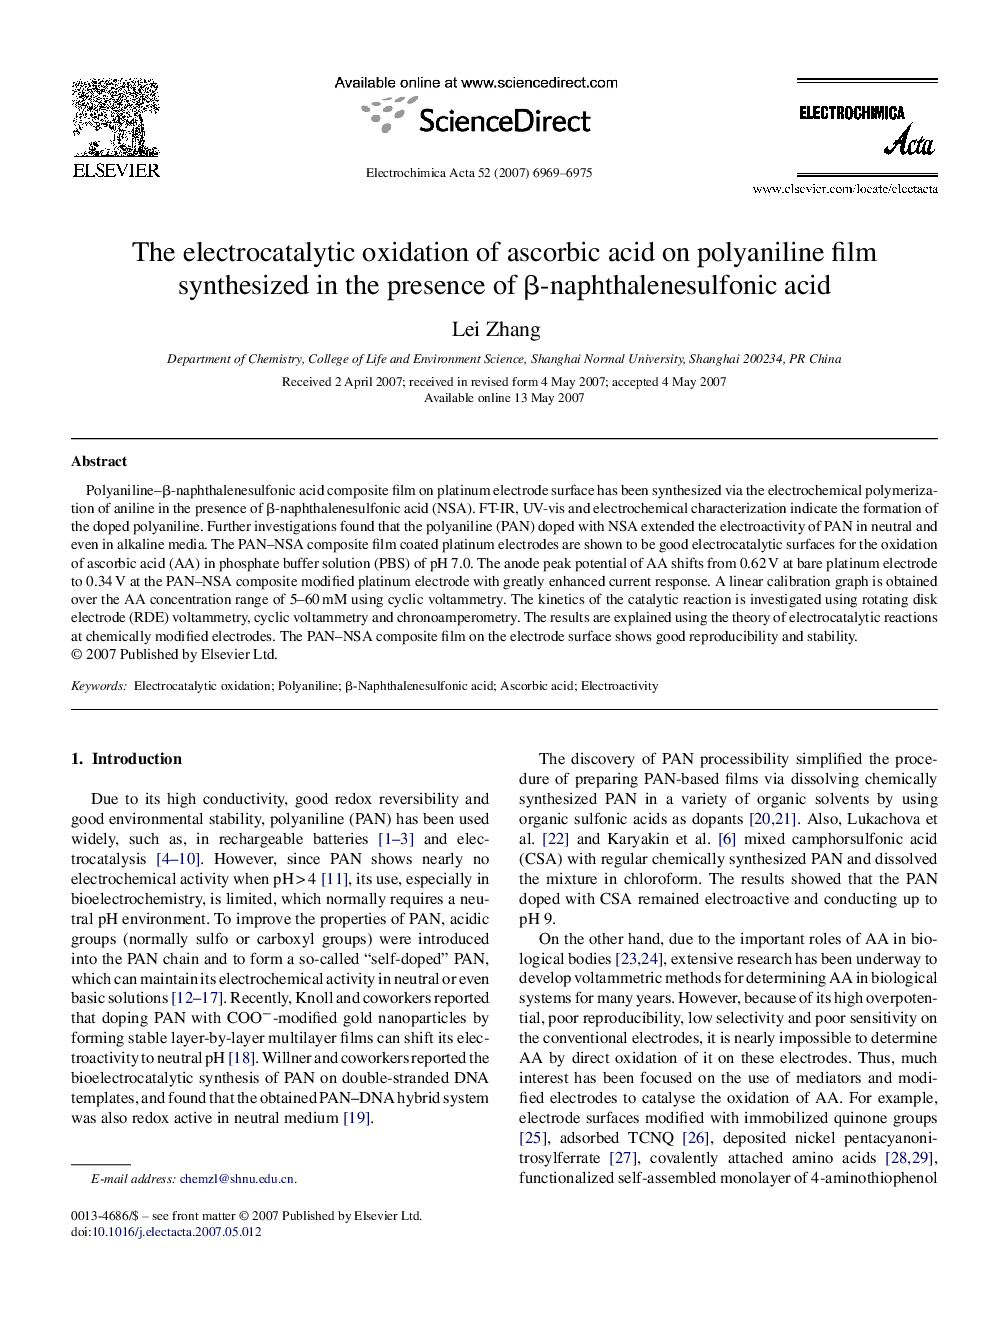 The electrocatalytic oxidation of ascorbic acid on polyaniline film synthesized in the presence of β-naphthalenesulfonic acid